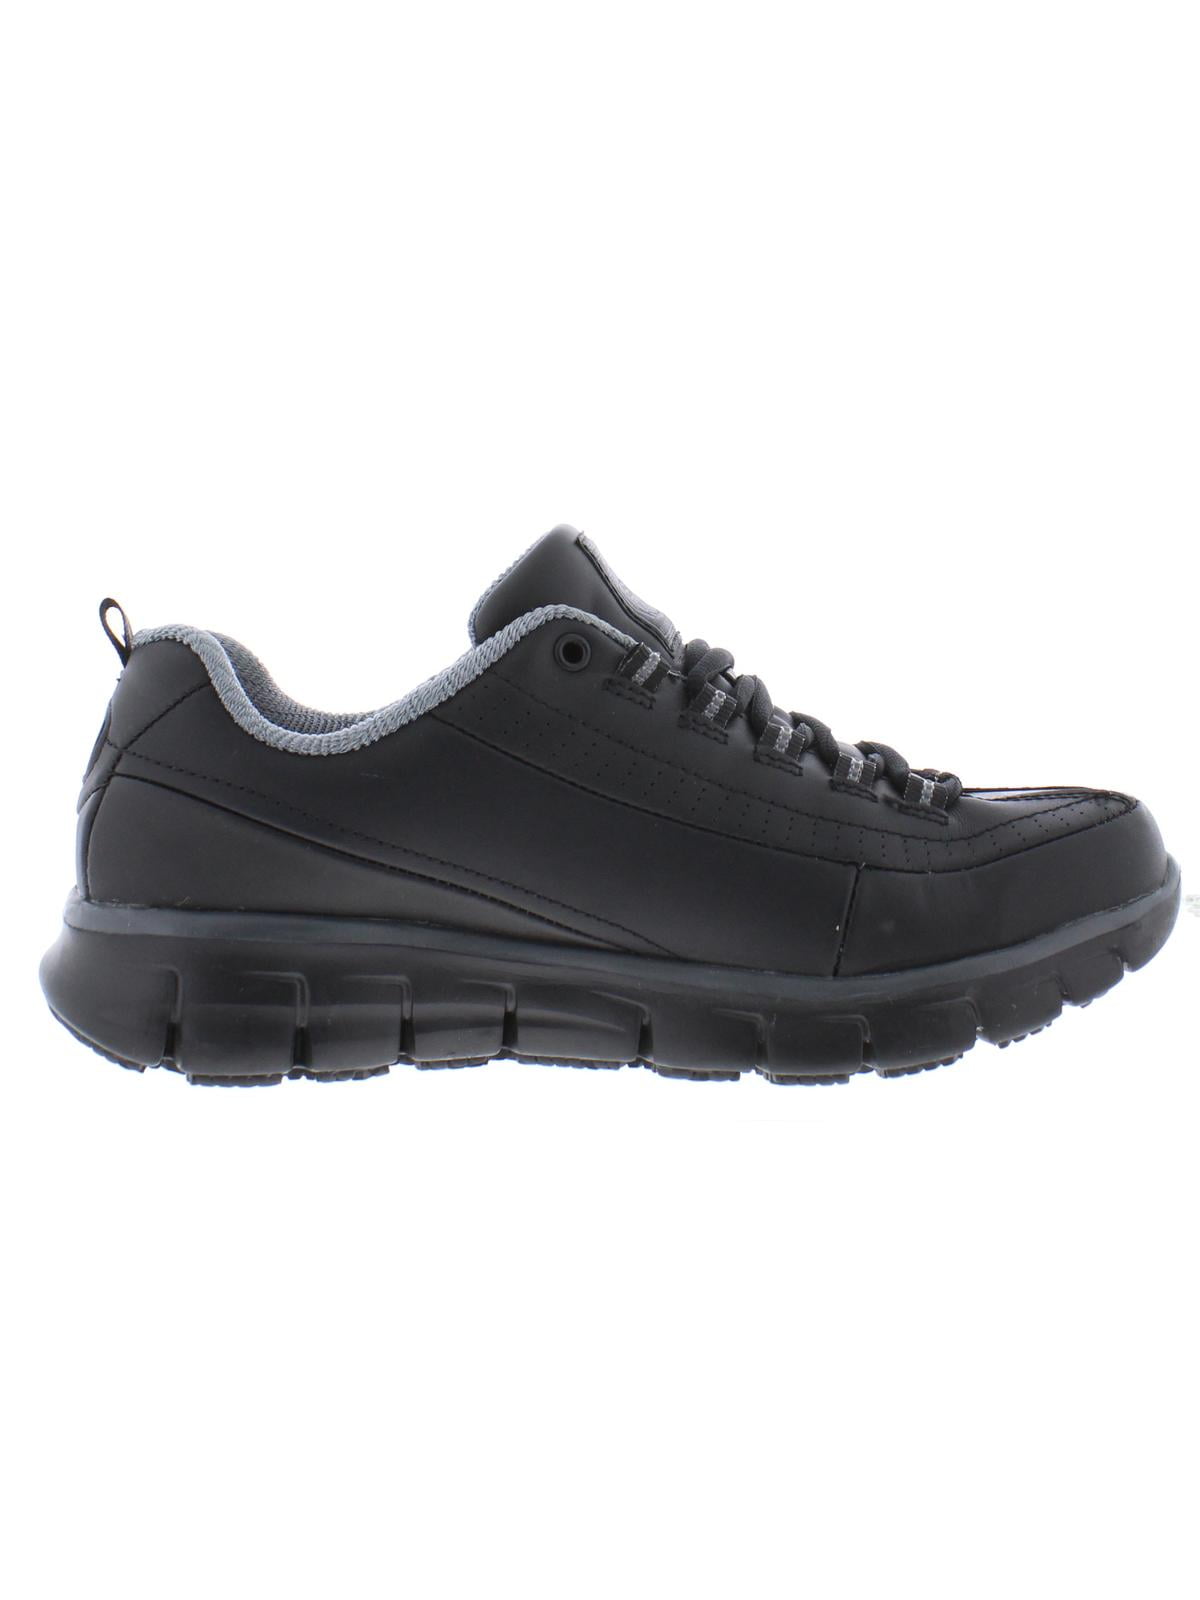 Skechers for Work Women's Track Trickel Slip Resistant Work Shoe, Black/Grey, 8.5 M US - Walmart.com